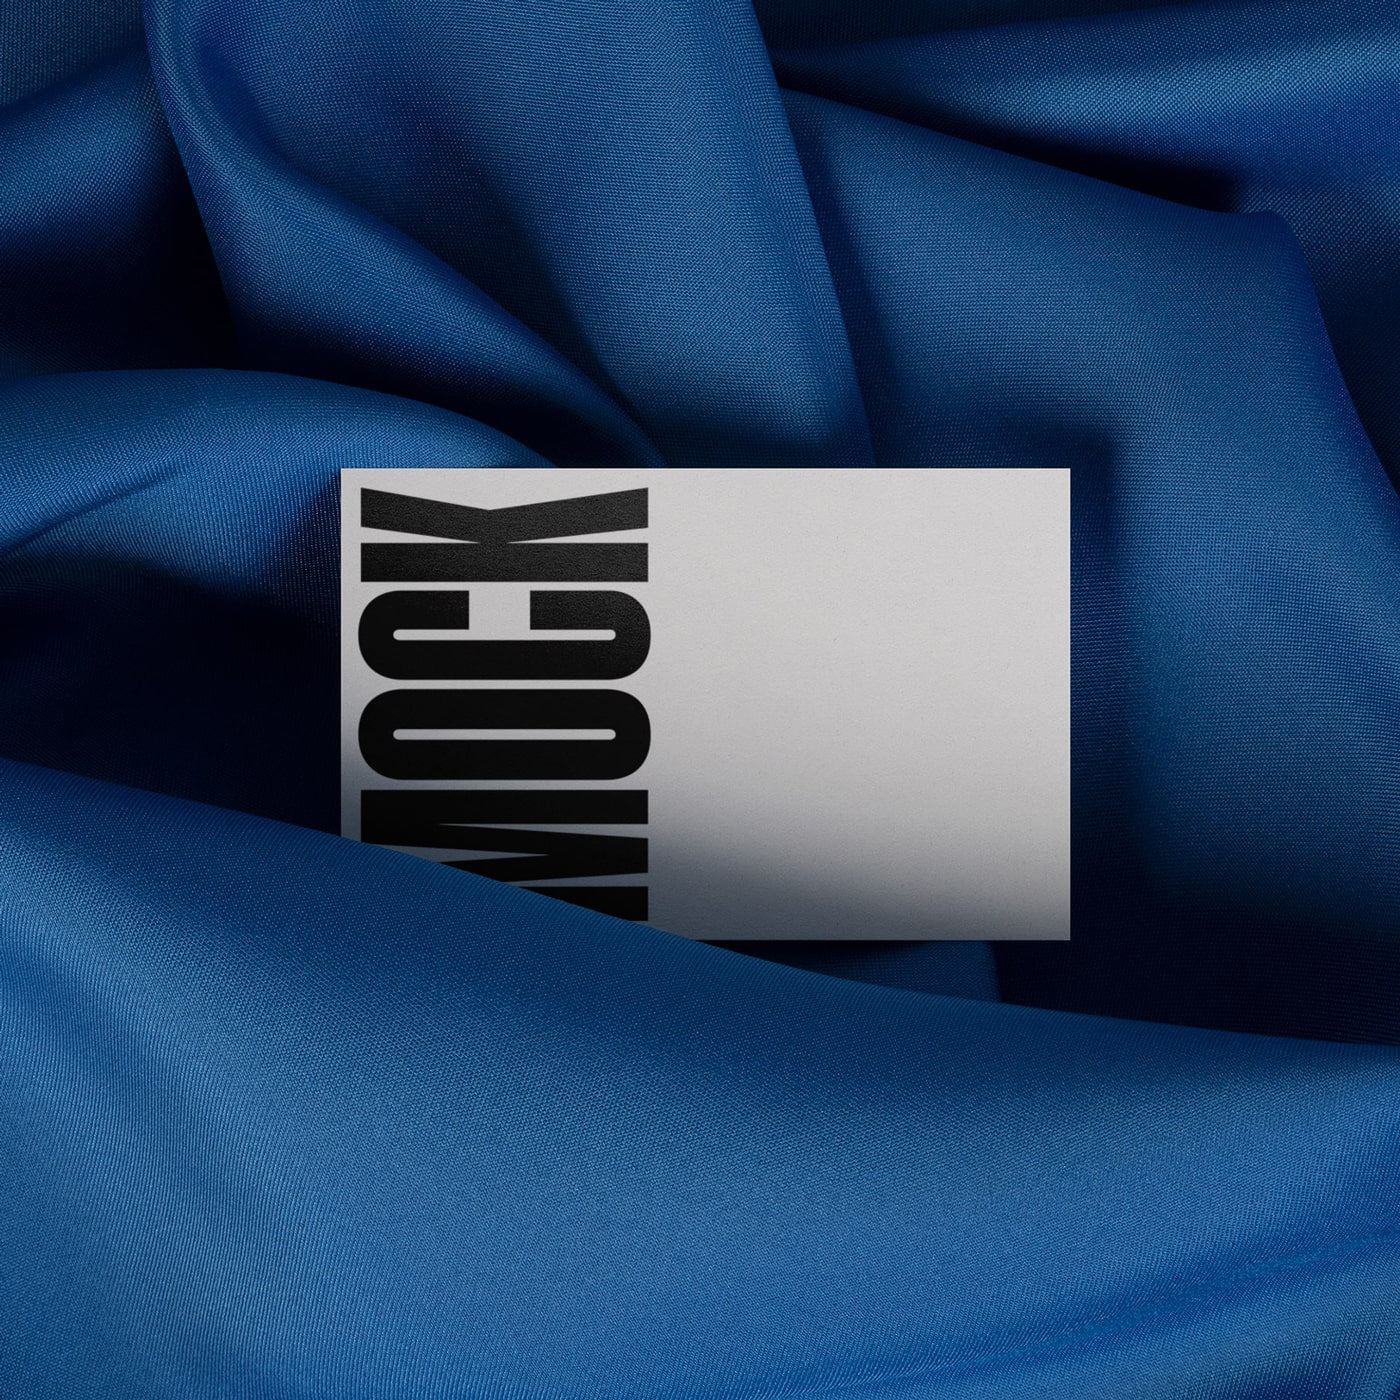 Branding Mockup Bundle 'Cloth' - 6 Stationery Mockups